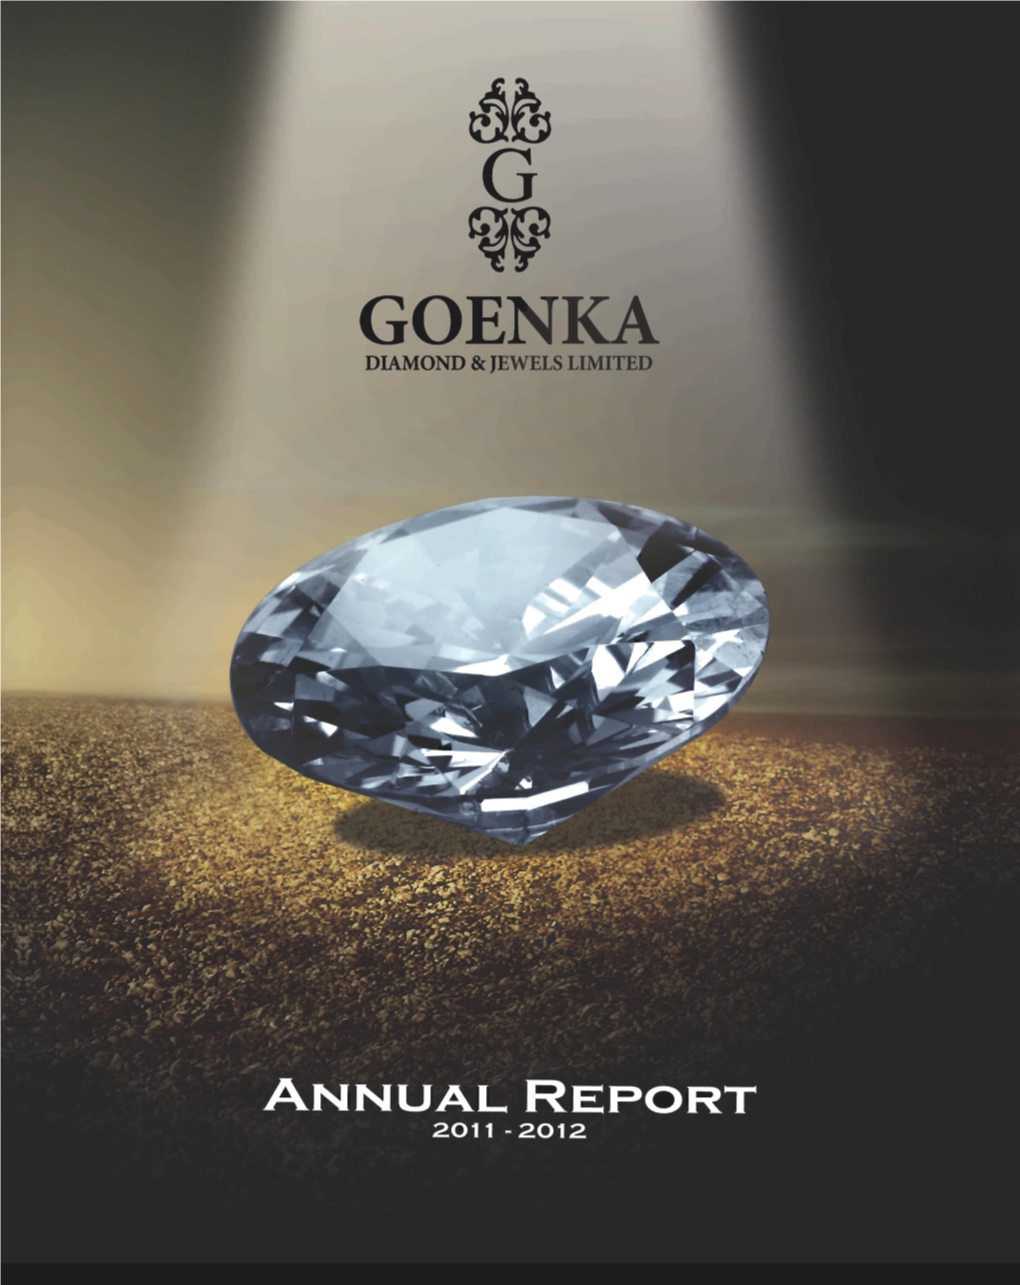 Goenka Diamond and Jewels Limited